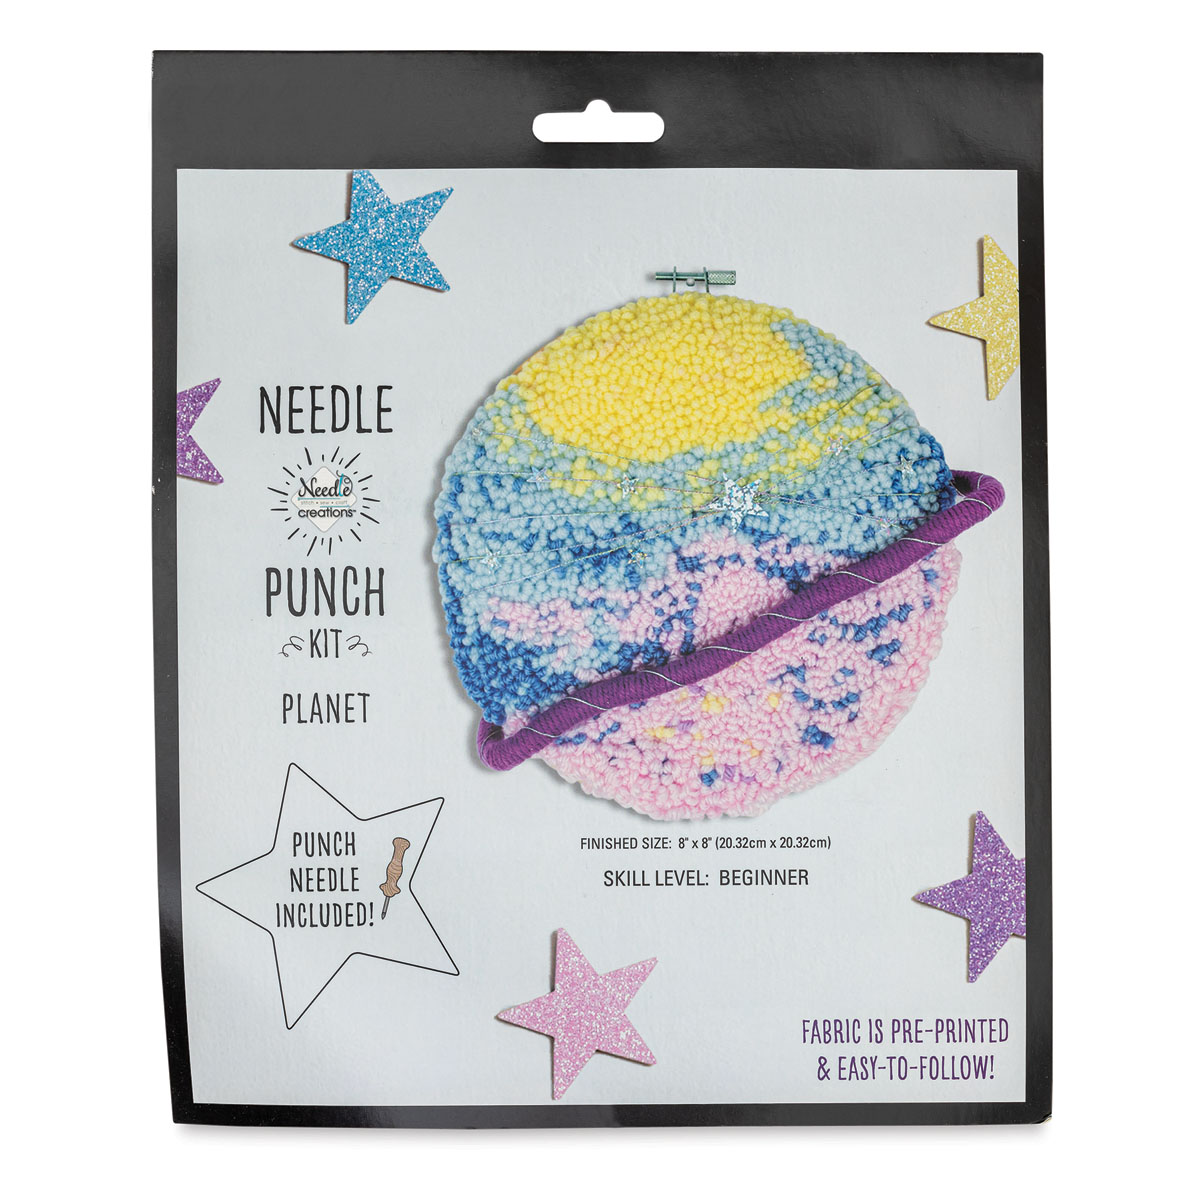 Needle Creations Needle Punch Kit - Planet, 8